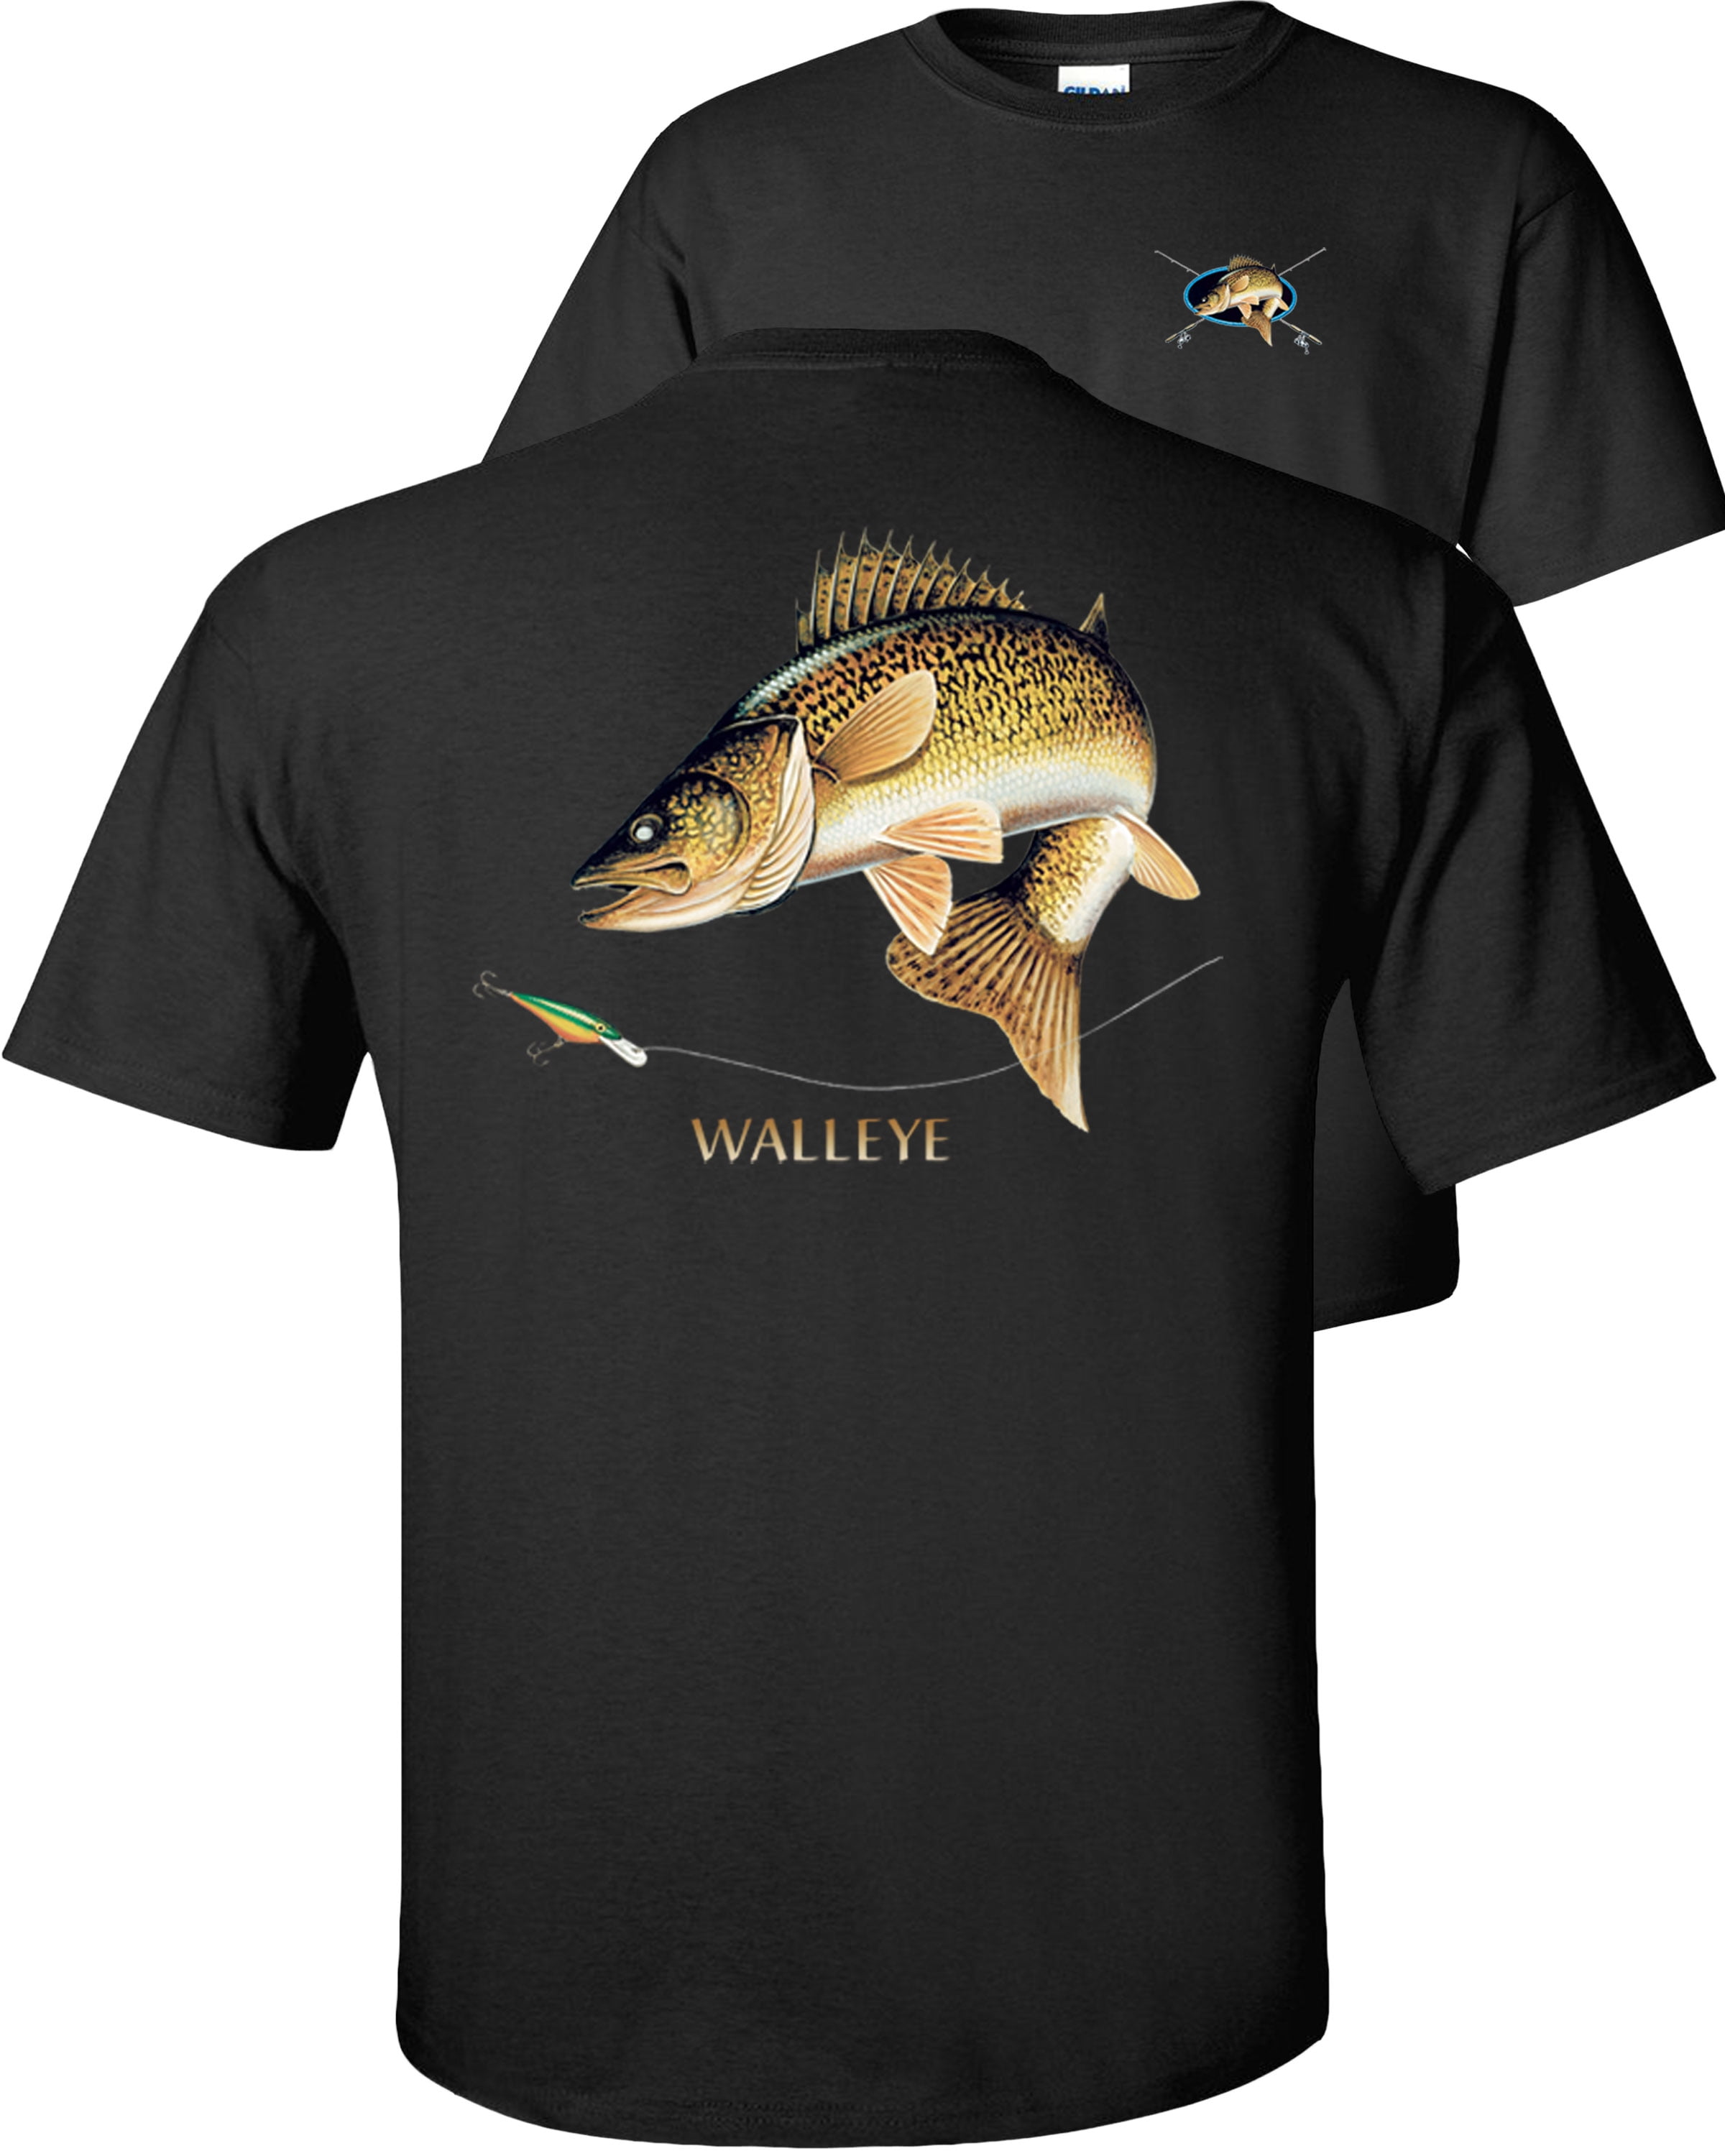 Fair Game Walleye Fishing T-Shirt, combination profile, Fishing Graphic  Tee-Black-3x